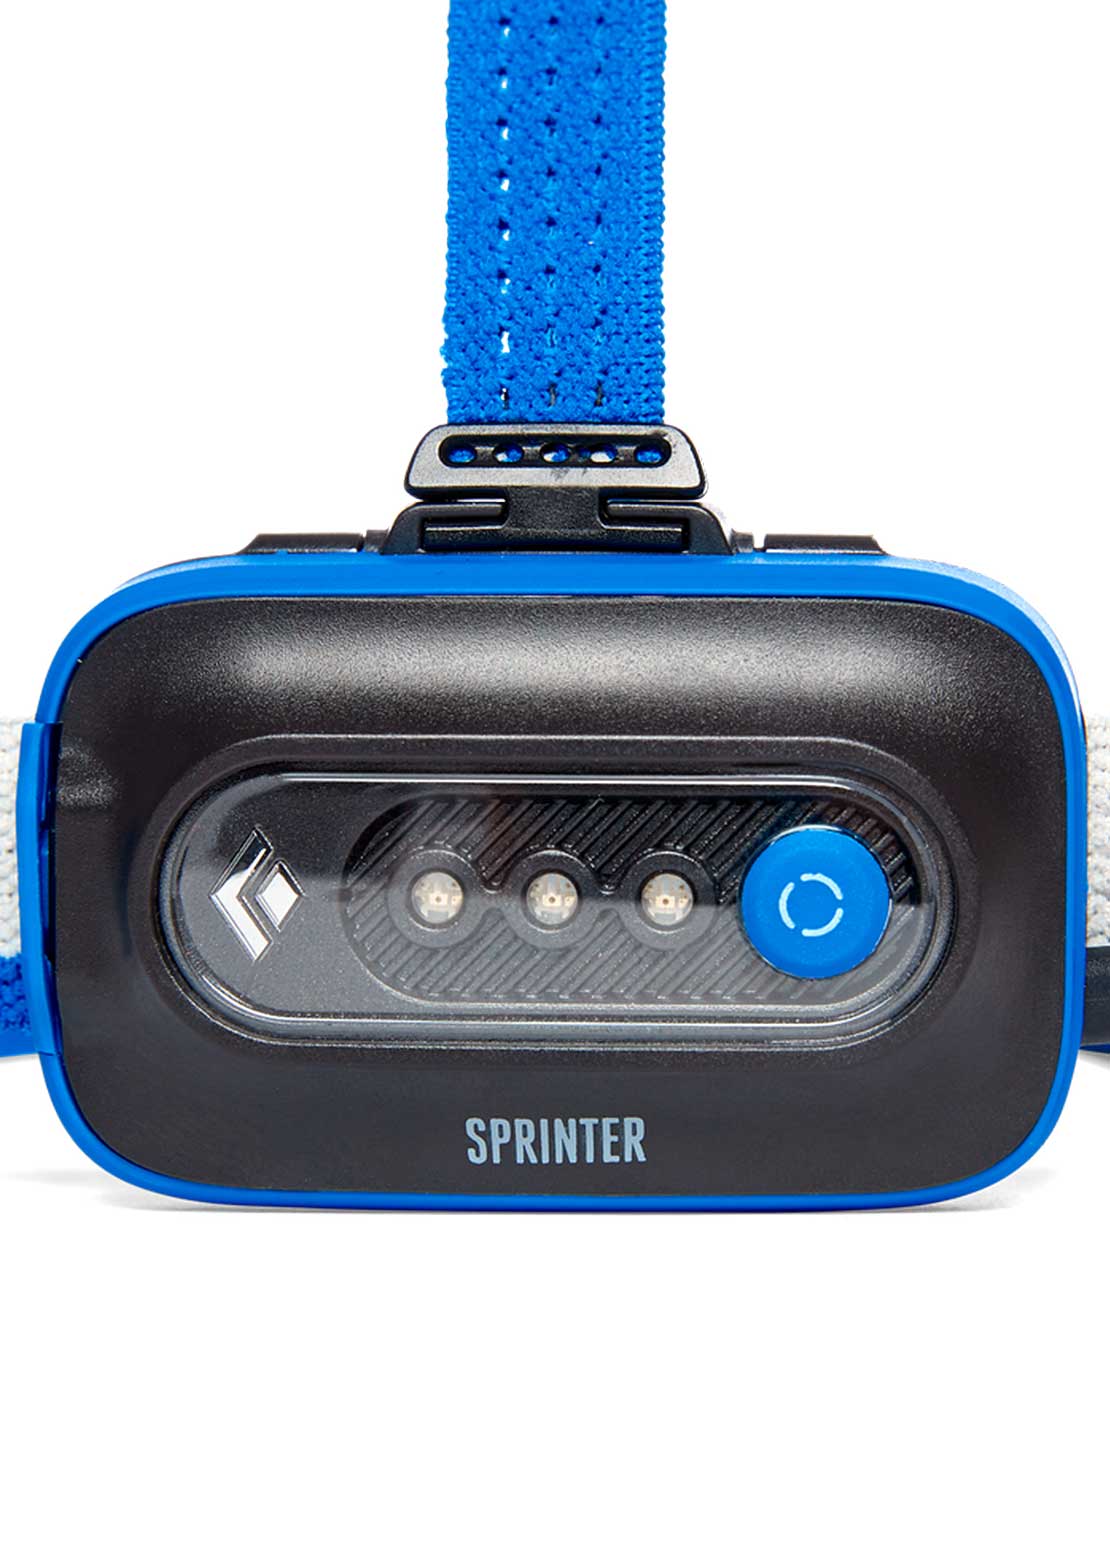 Black Diamond Sprinter 500 Headlamp Ultra Blue